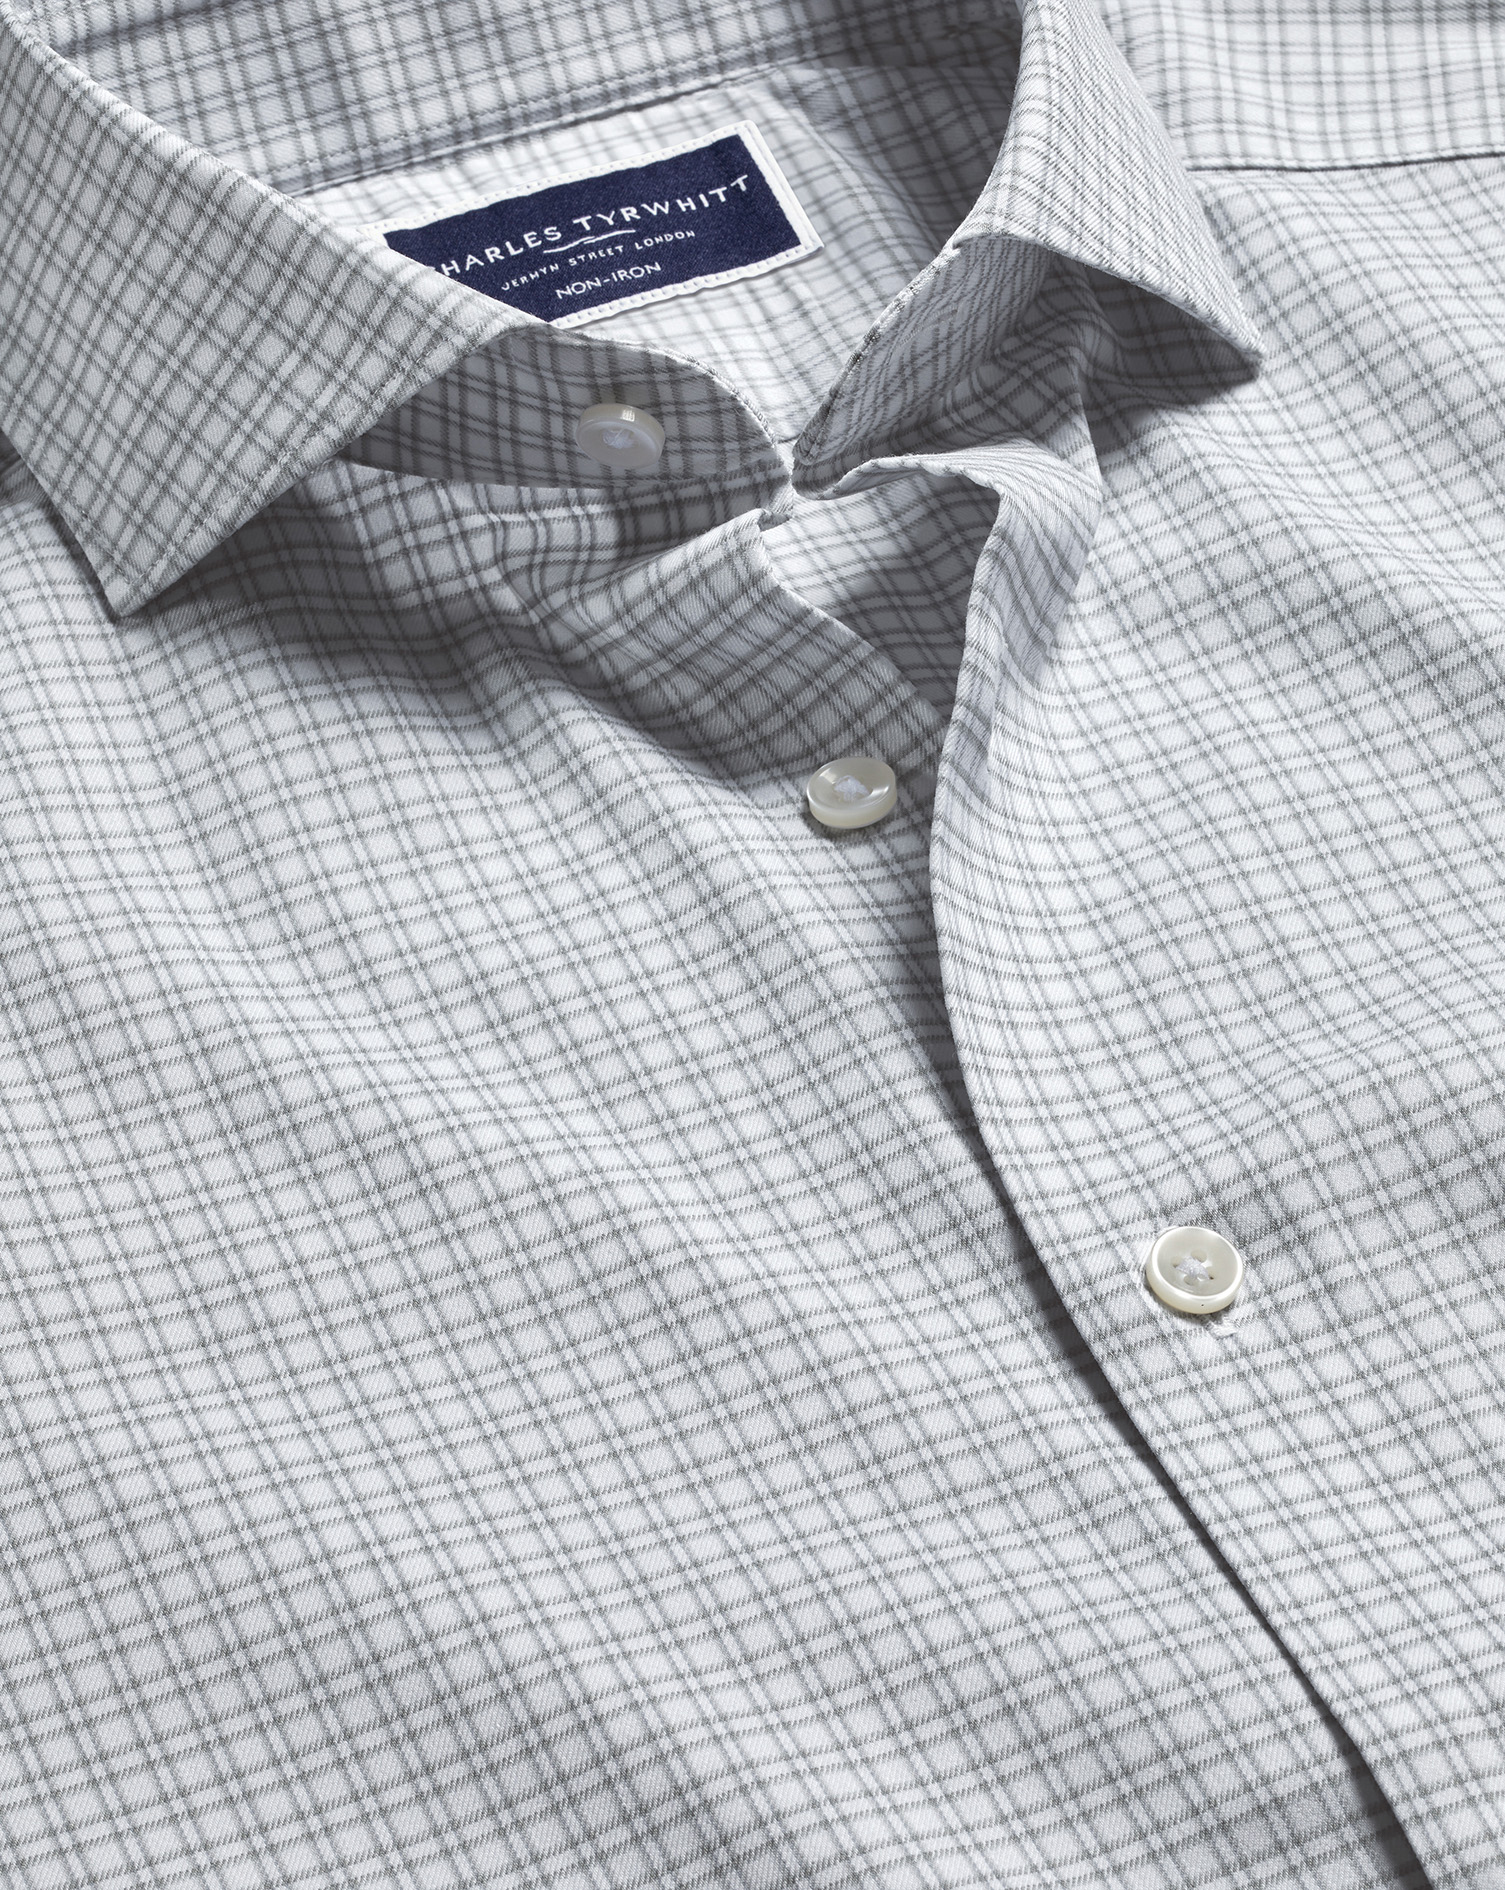 Men's Charles Tyrwhitt Non-Iron Stretch Twill Grid Check Dress Shirt - Silver Grey Single Cuff Size 